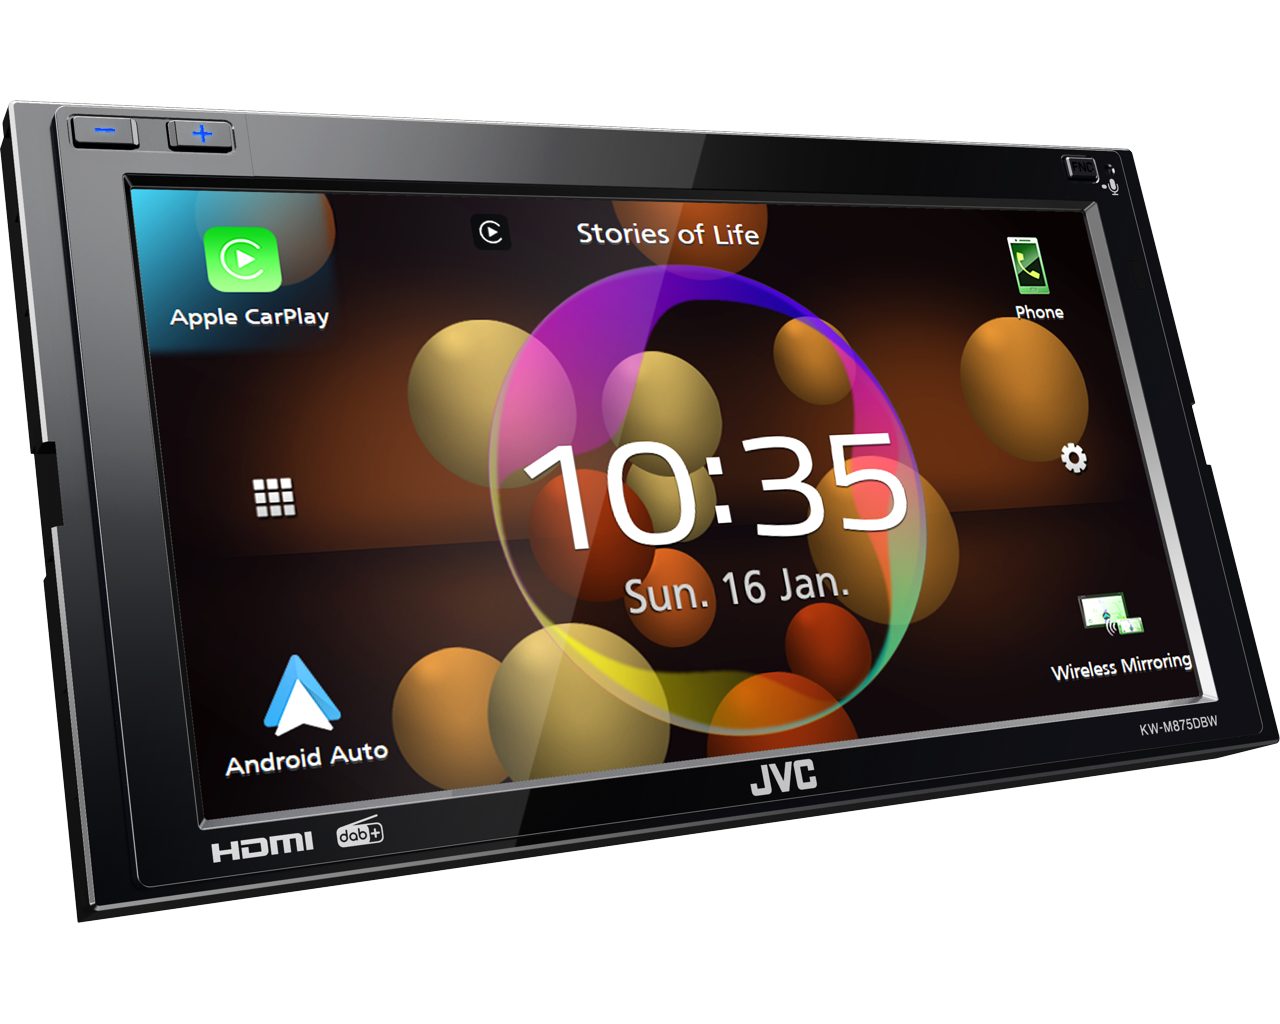 Apple JVC Autoradio Bluetoaoth DAB+ CarPlay Android-Auto KW-M875DBW